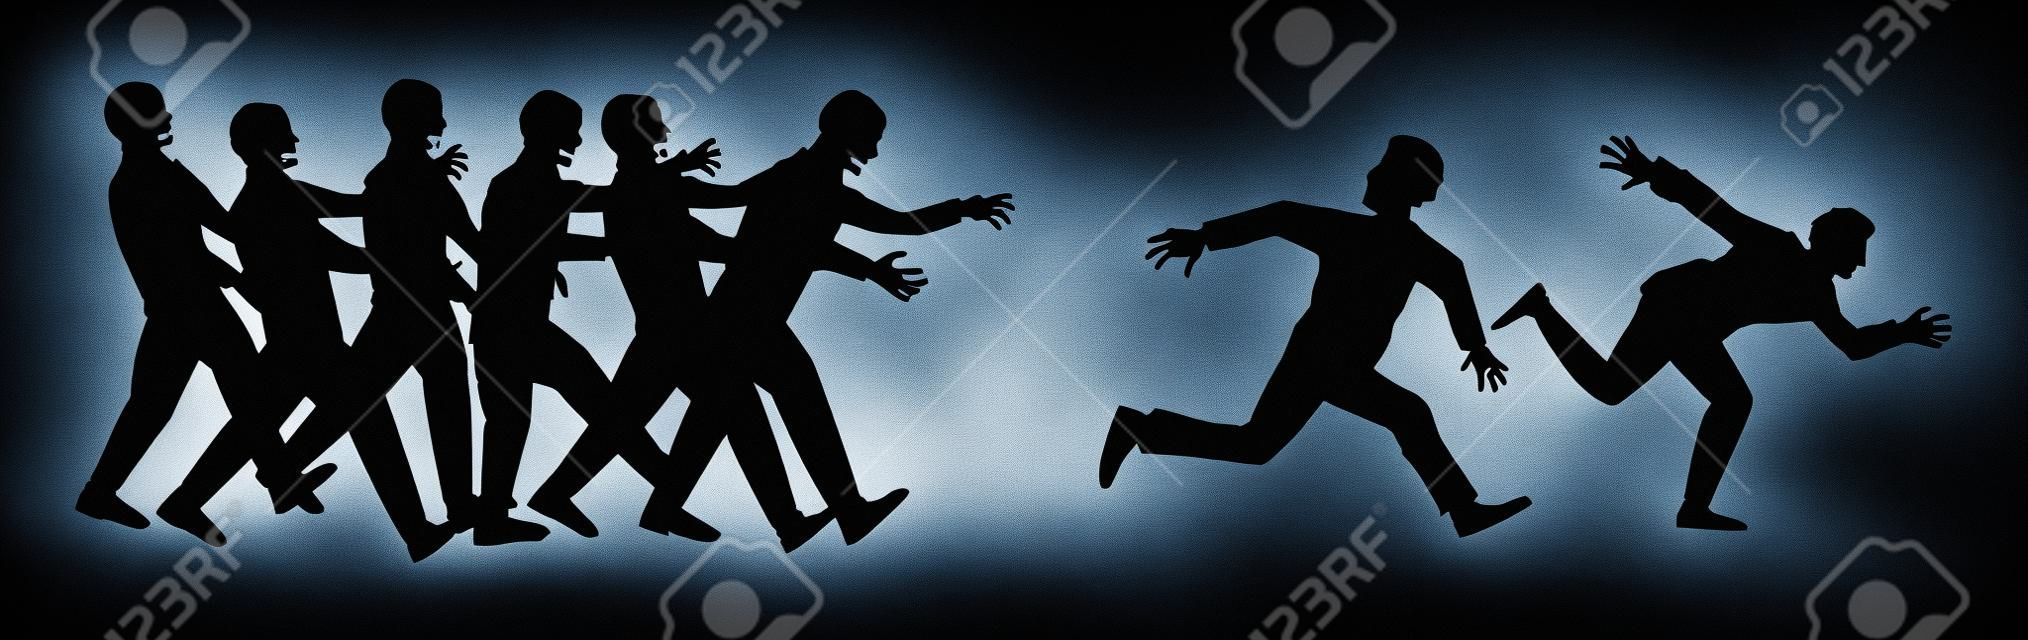 silhouet mens vlucht uit zombies groep